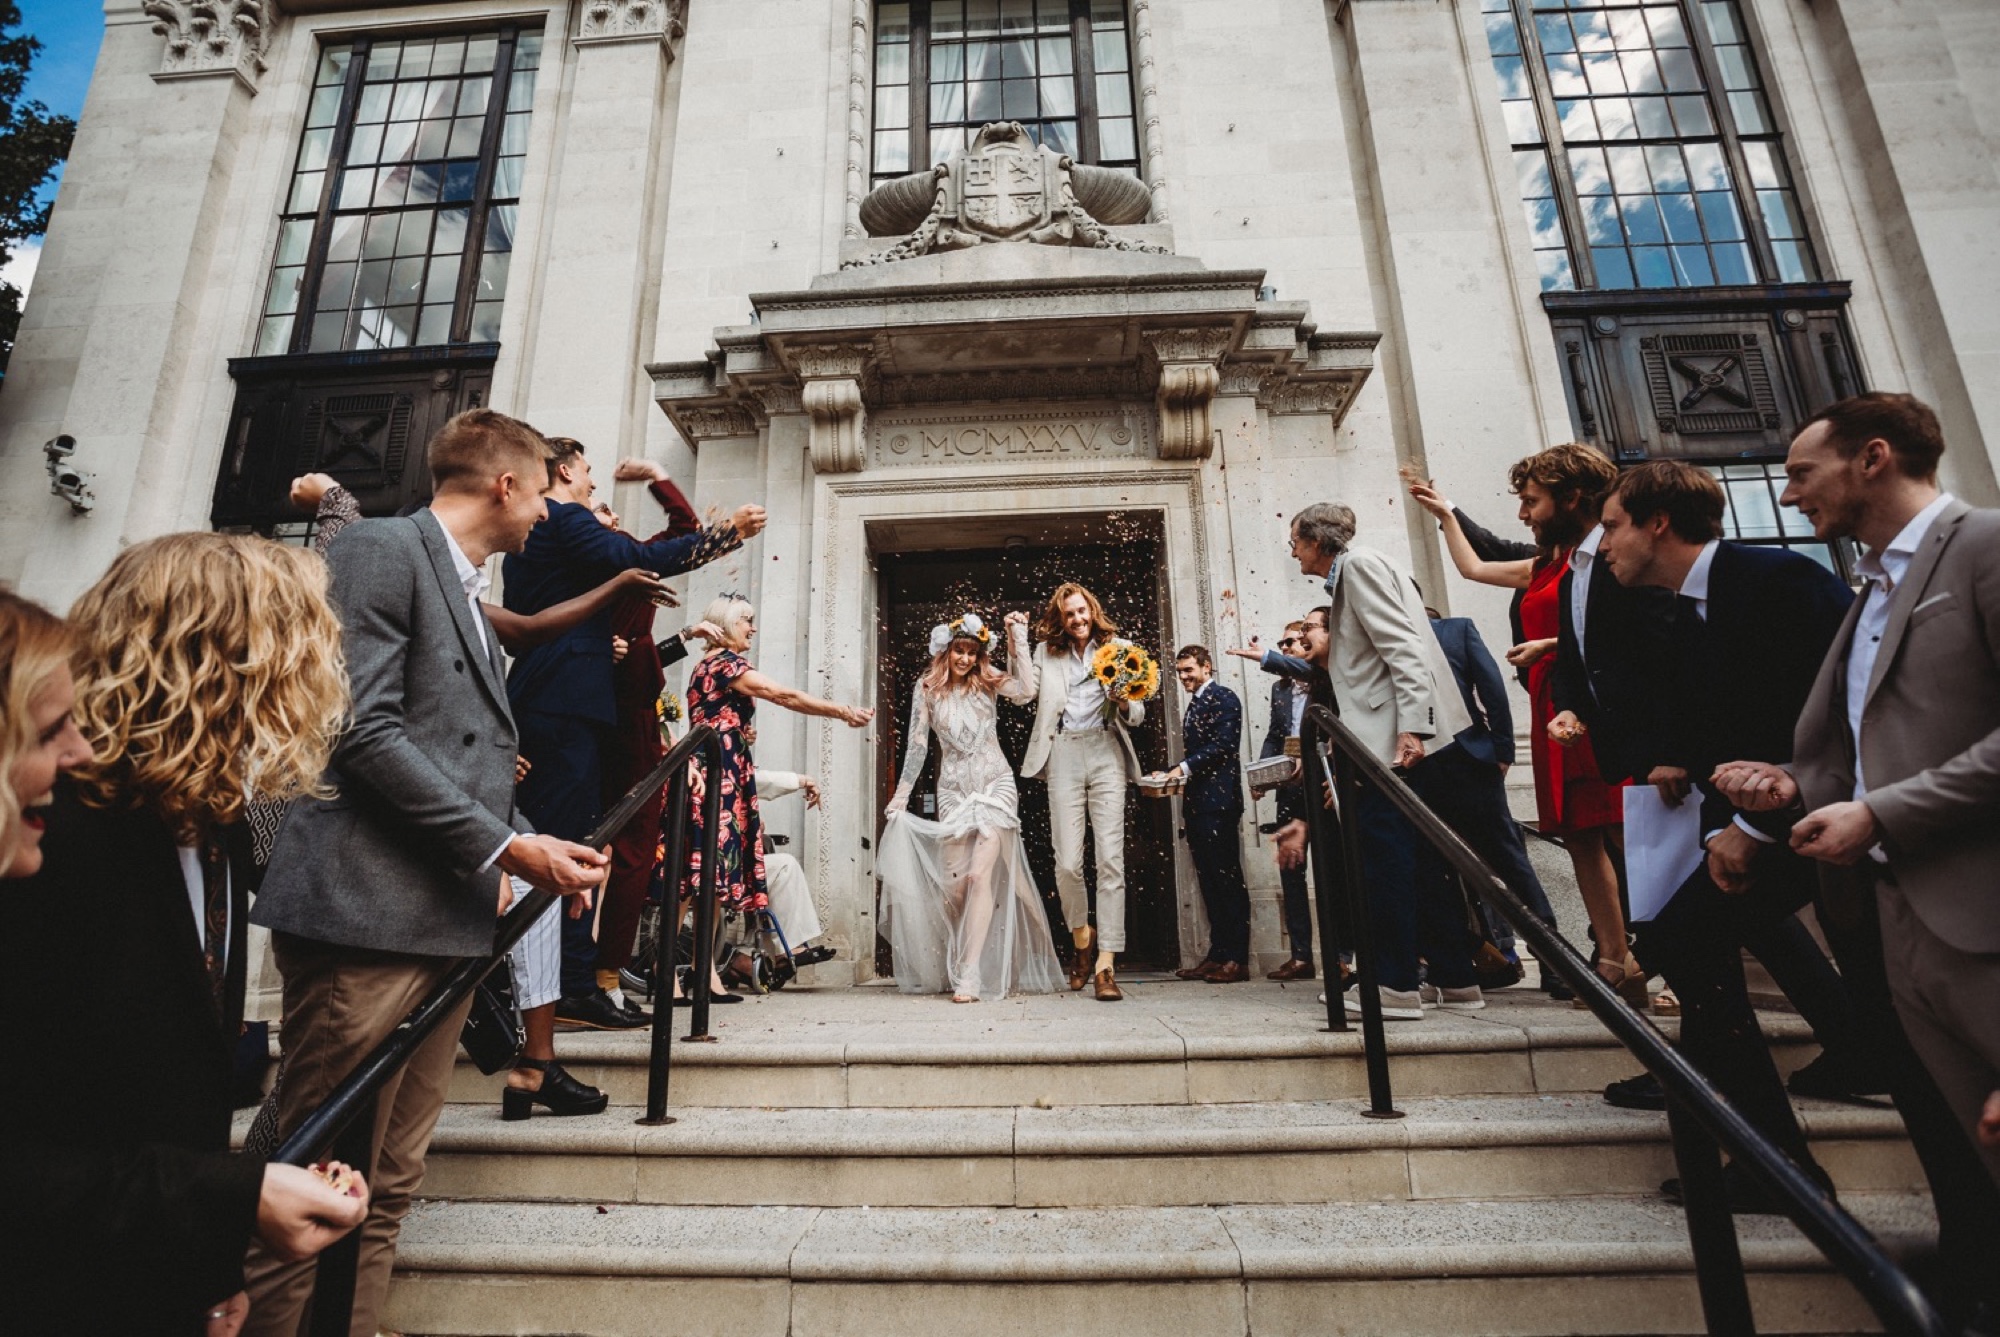 hackney London wedding ceremony exit by zakas photography 